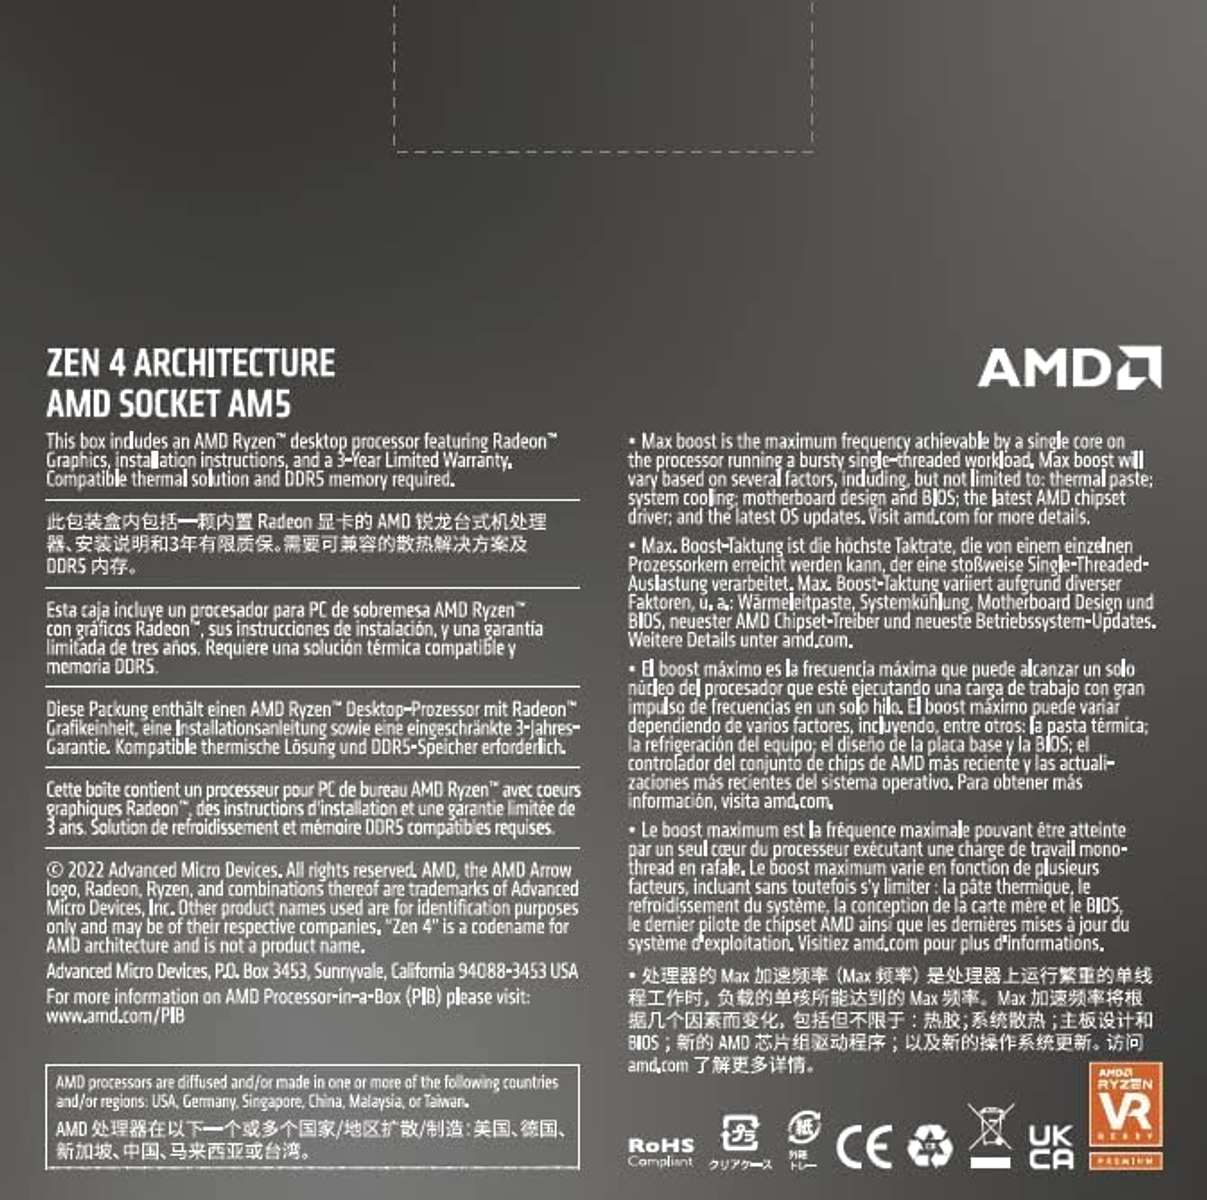 AMD 5 100-100000593WOF RYZEN Prozessor, Mehrfarbig 7600X